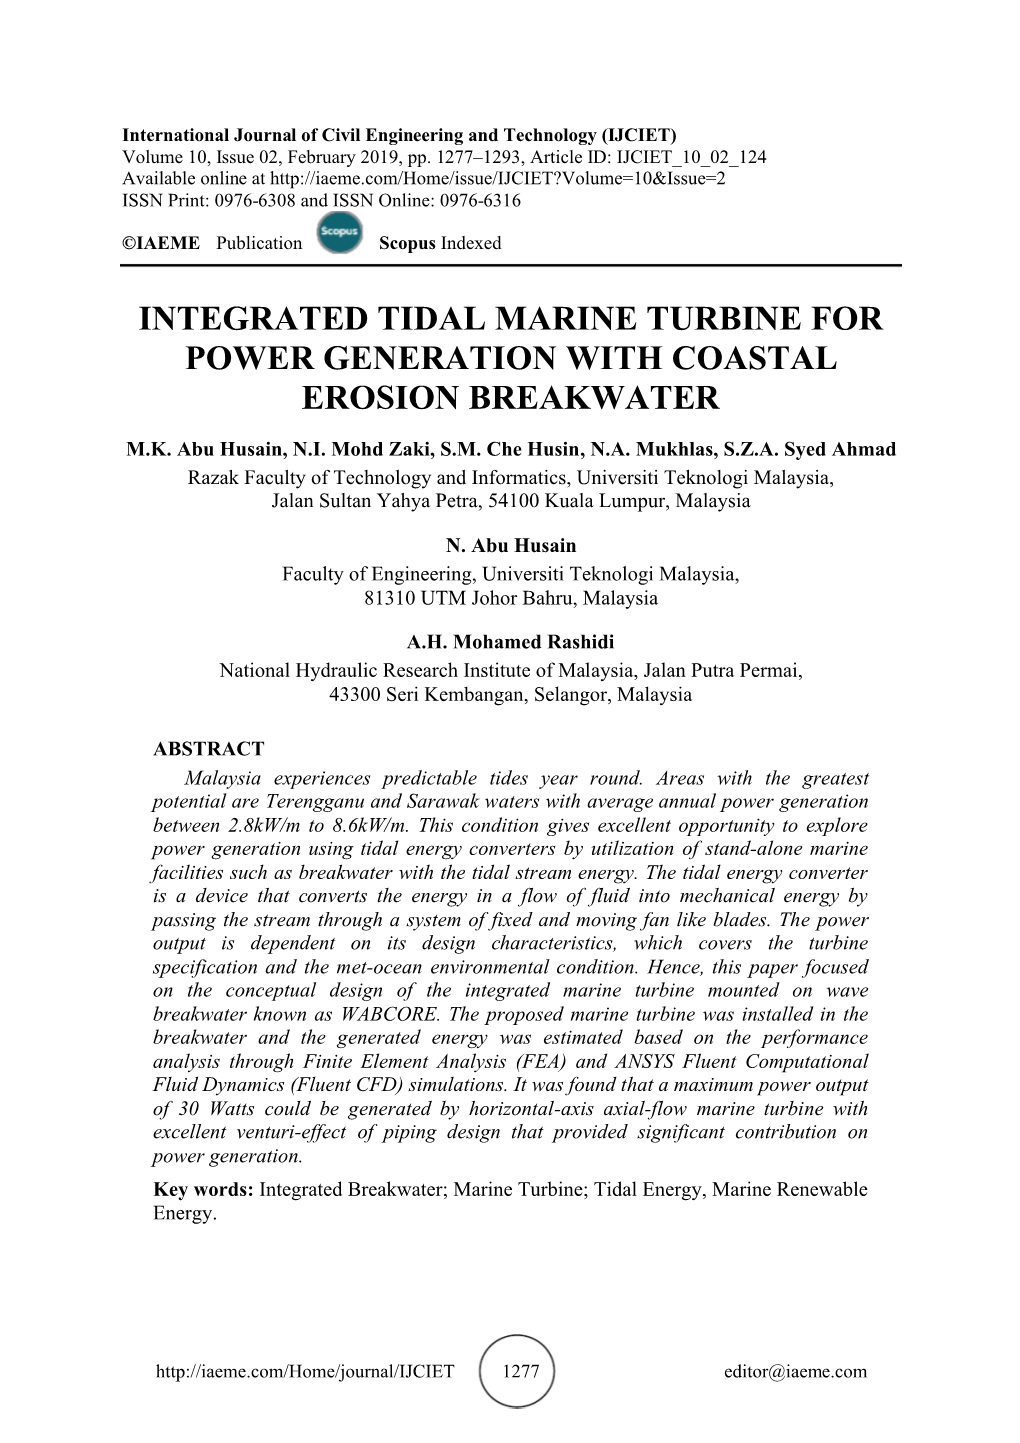 Integrated Tidal Marine Turbine for Power Generation Wit Coastal H